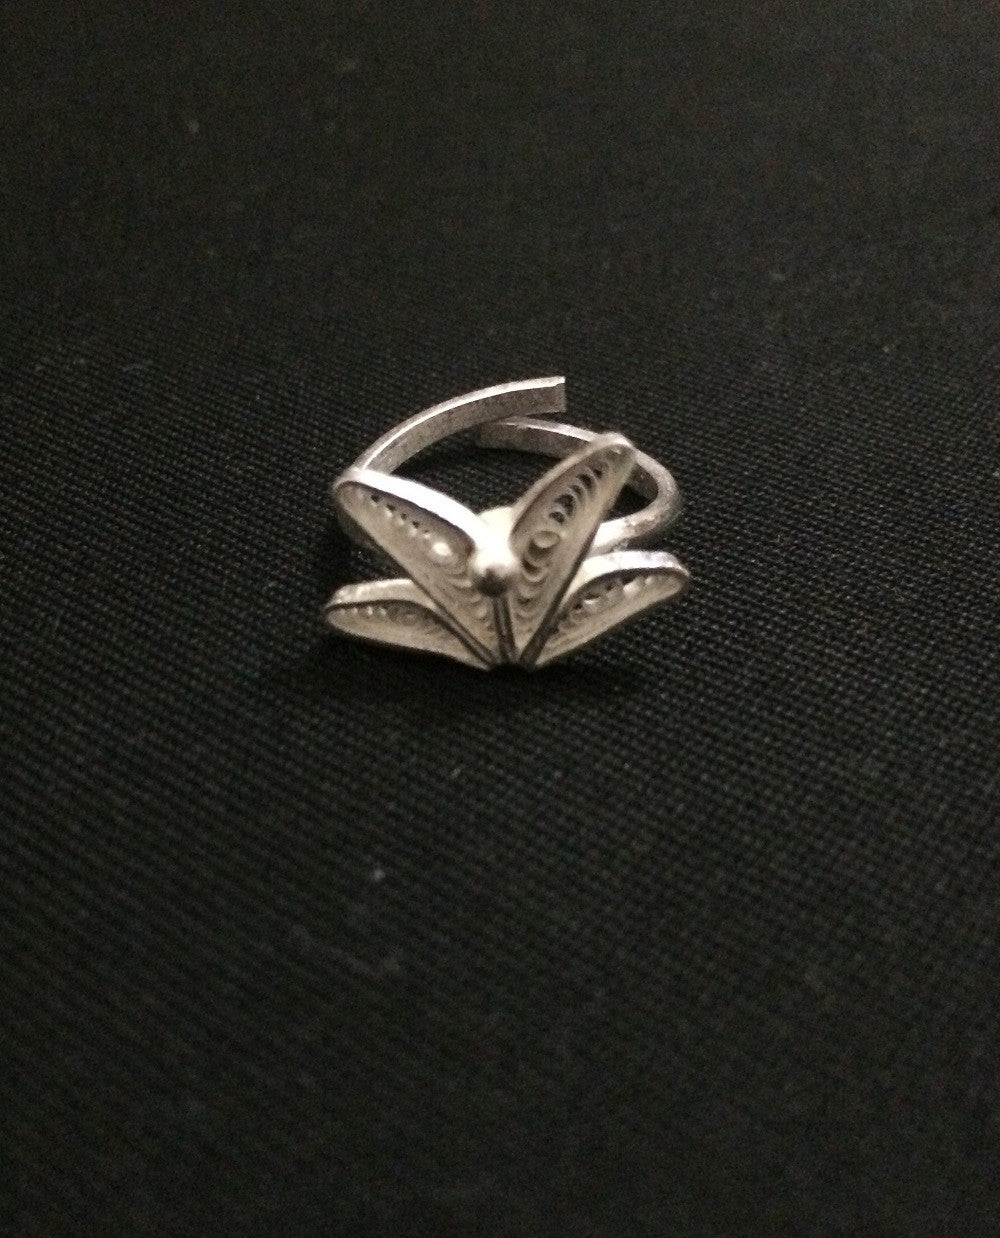 Silver Rings for women